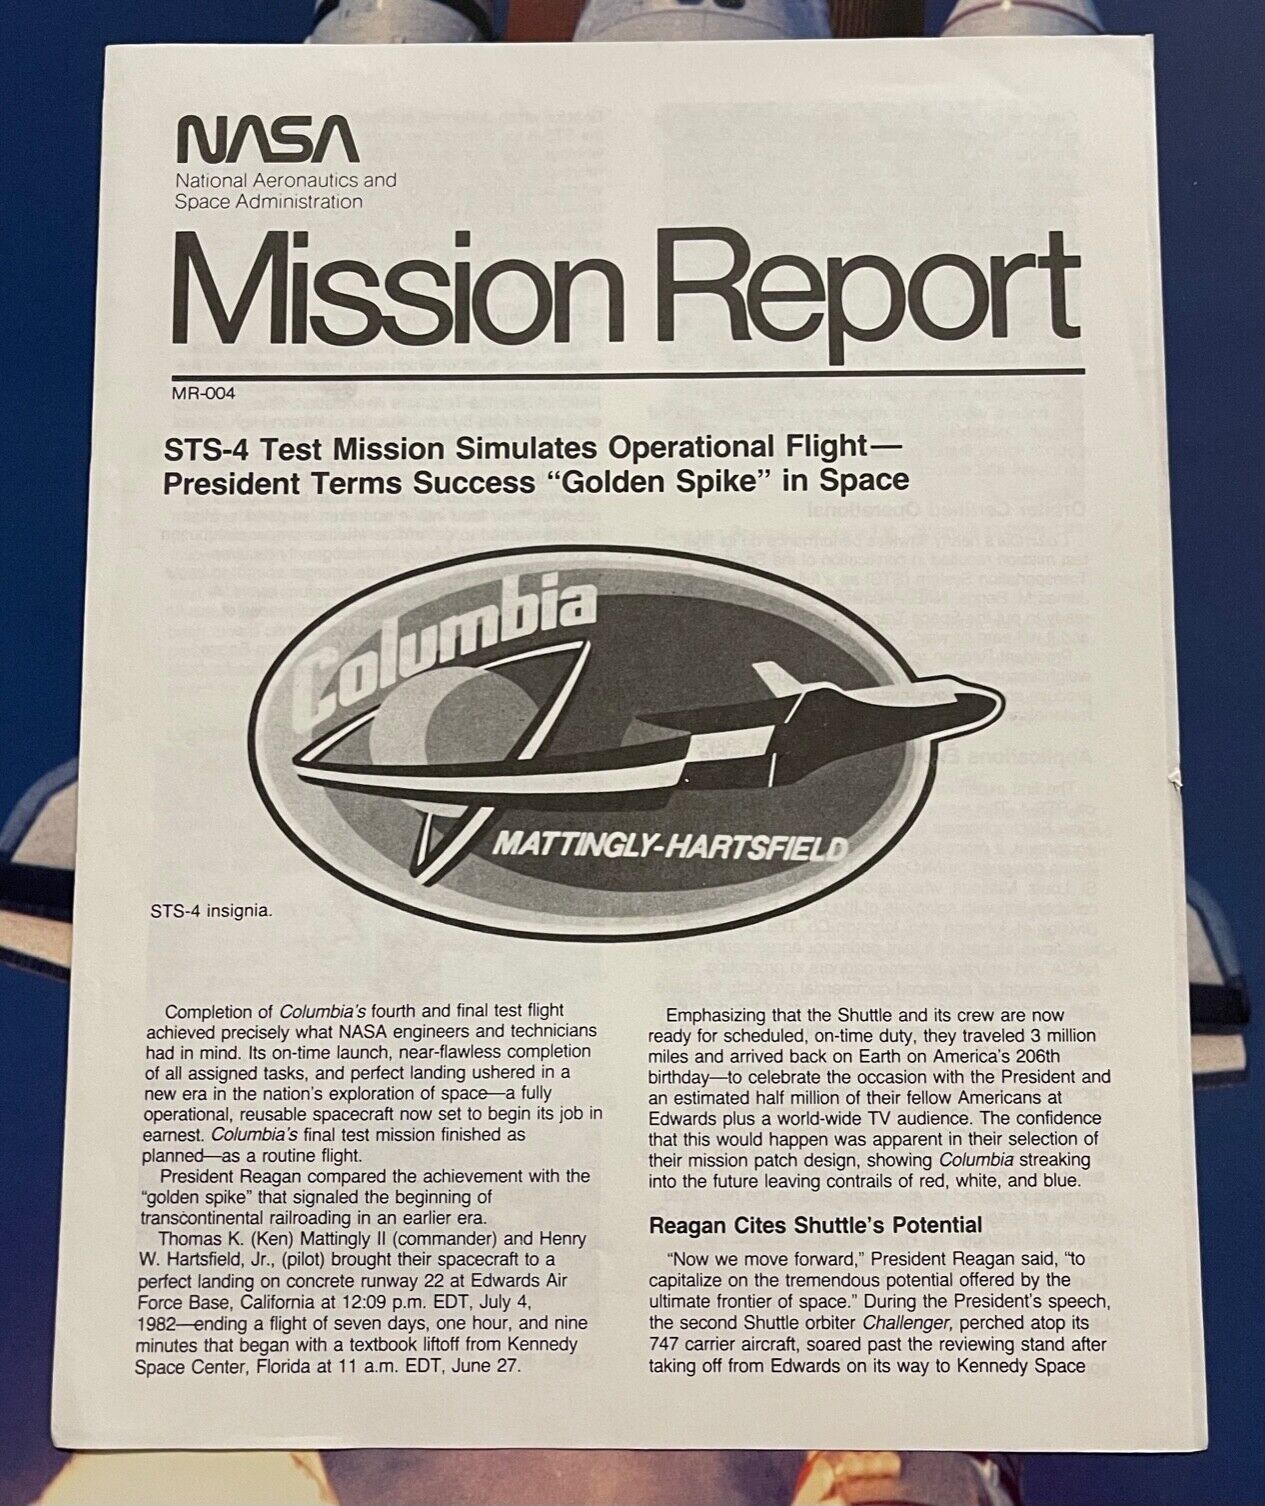 STS-4 SIMULATES OPERATIONAL FLIGHT NASA MISSION REPORT NASA MR-004